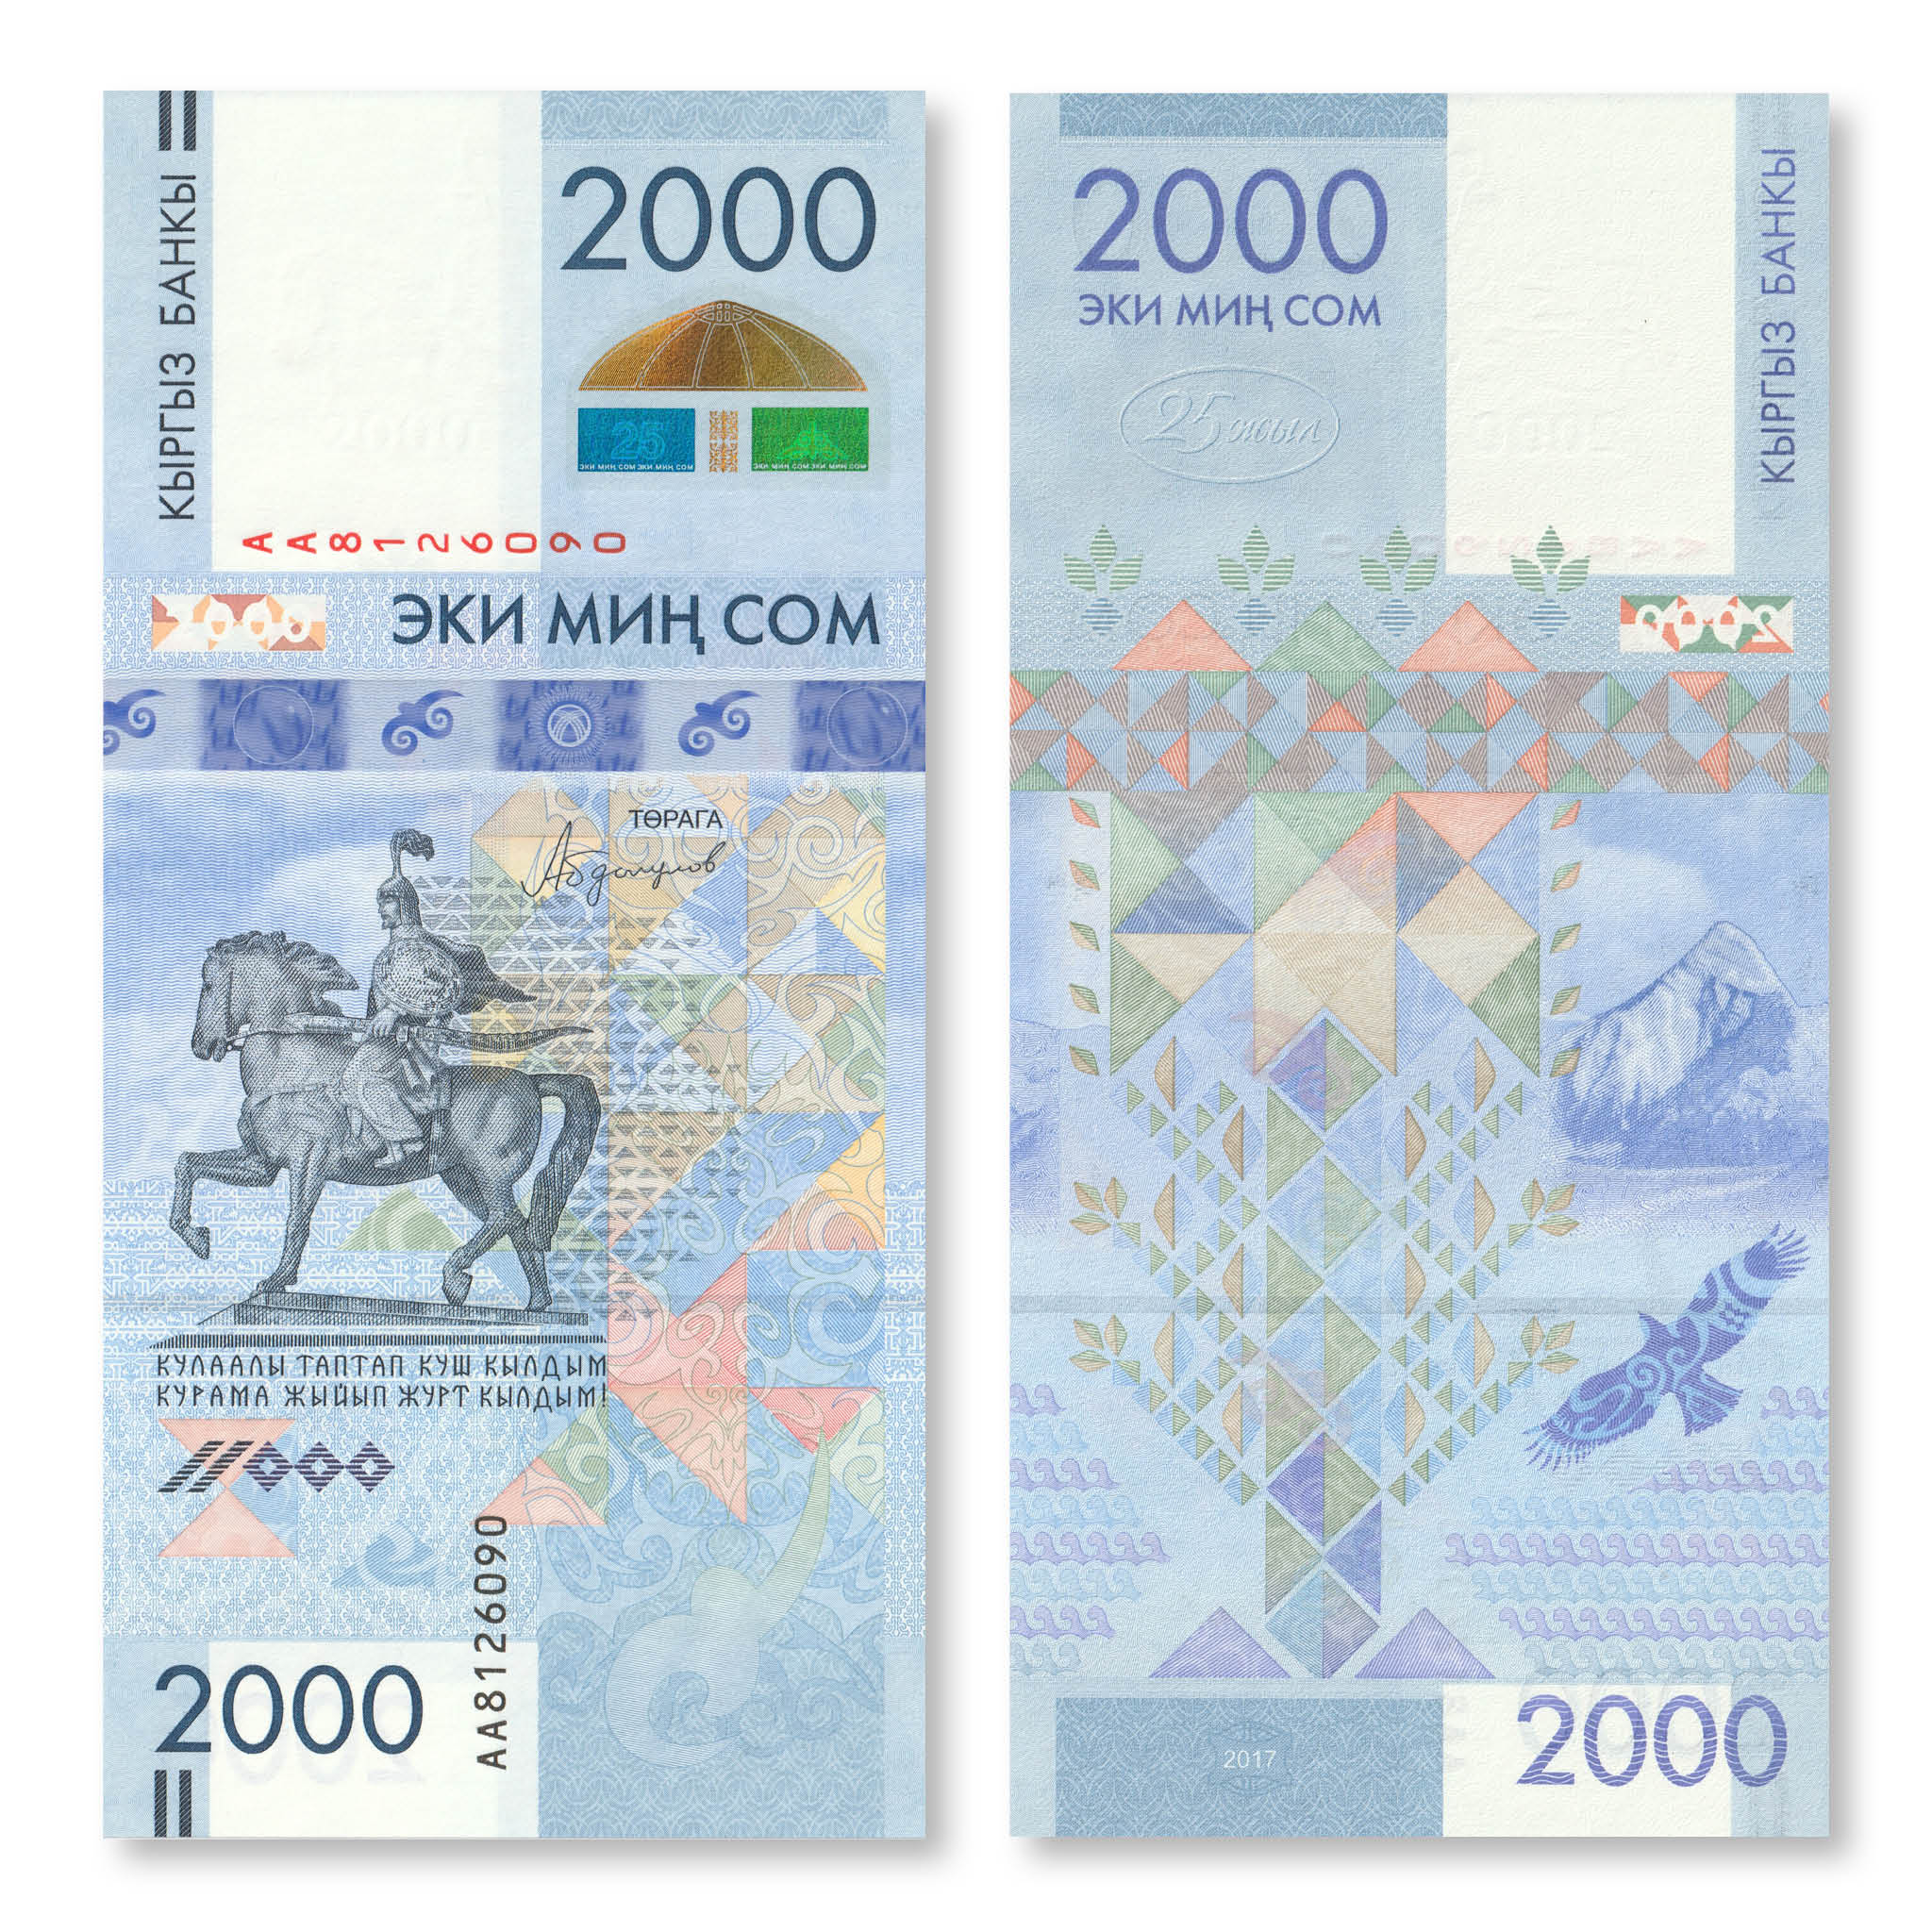 Kyrgyzstan 2000 Som, 2017, B234a, P33, UNC - Robert's World Money - World Banknotes